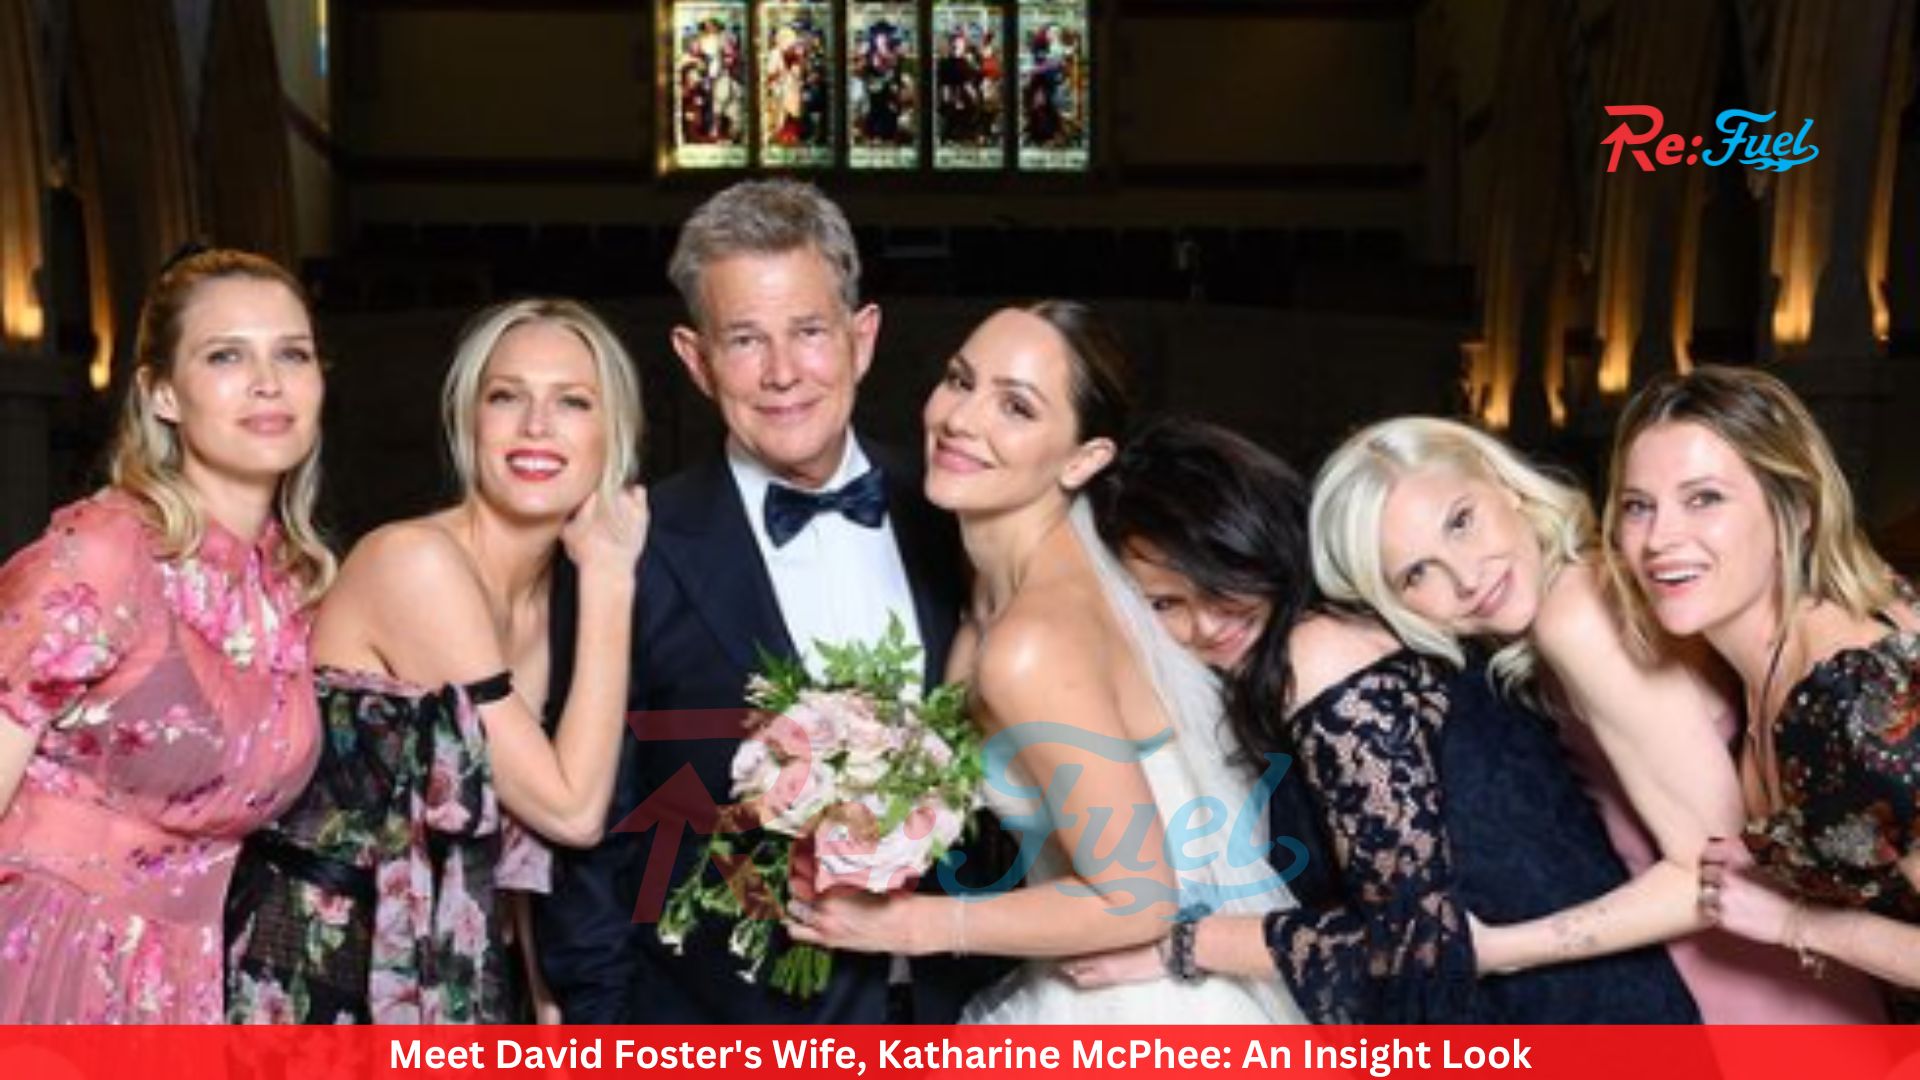 Meet David Foster's Wife, Katharine McPhee: An Insight Look